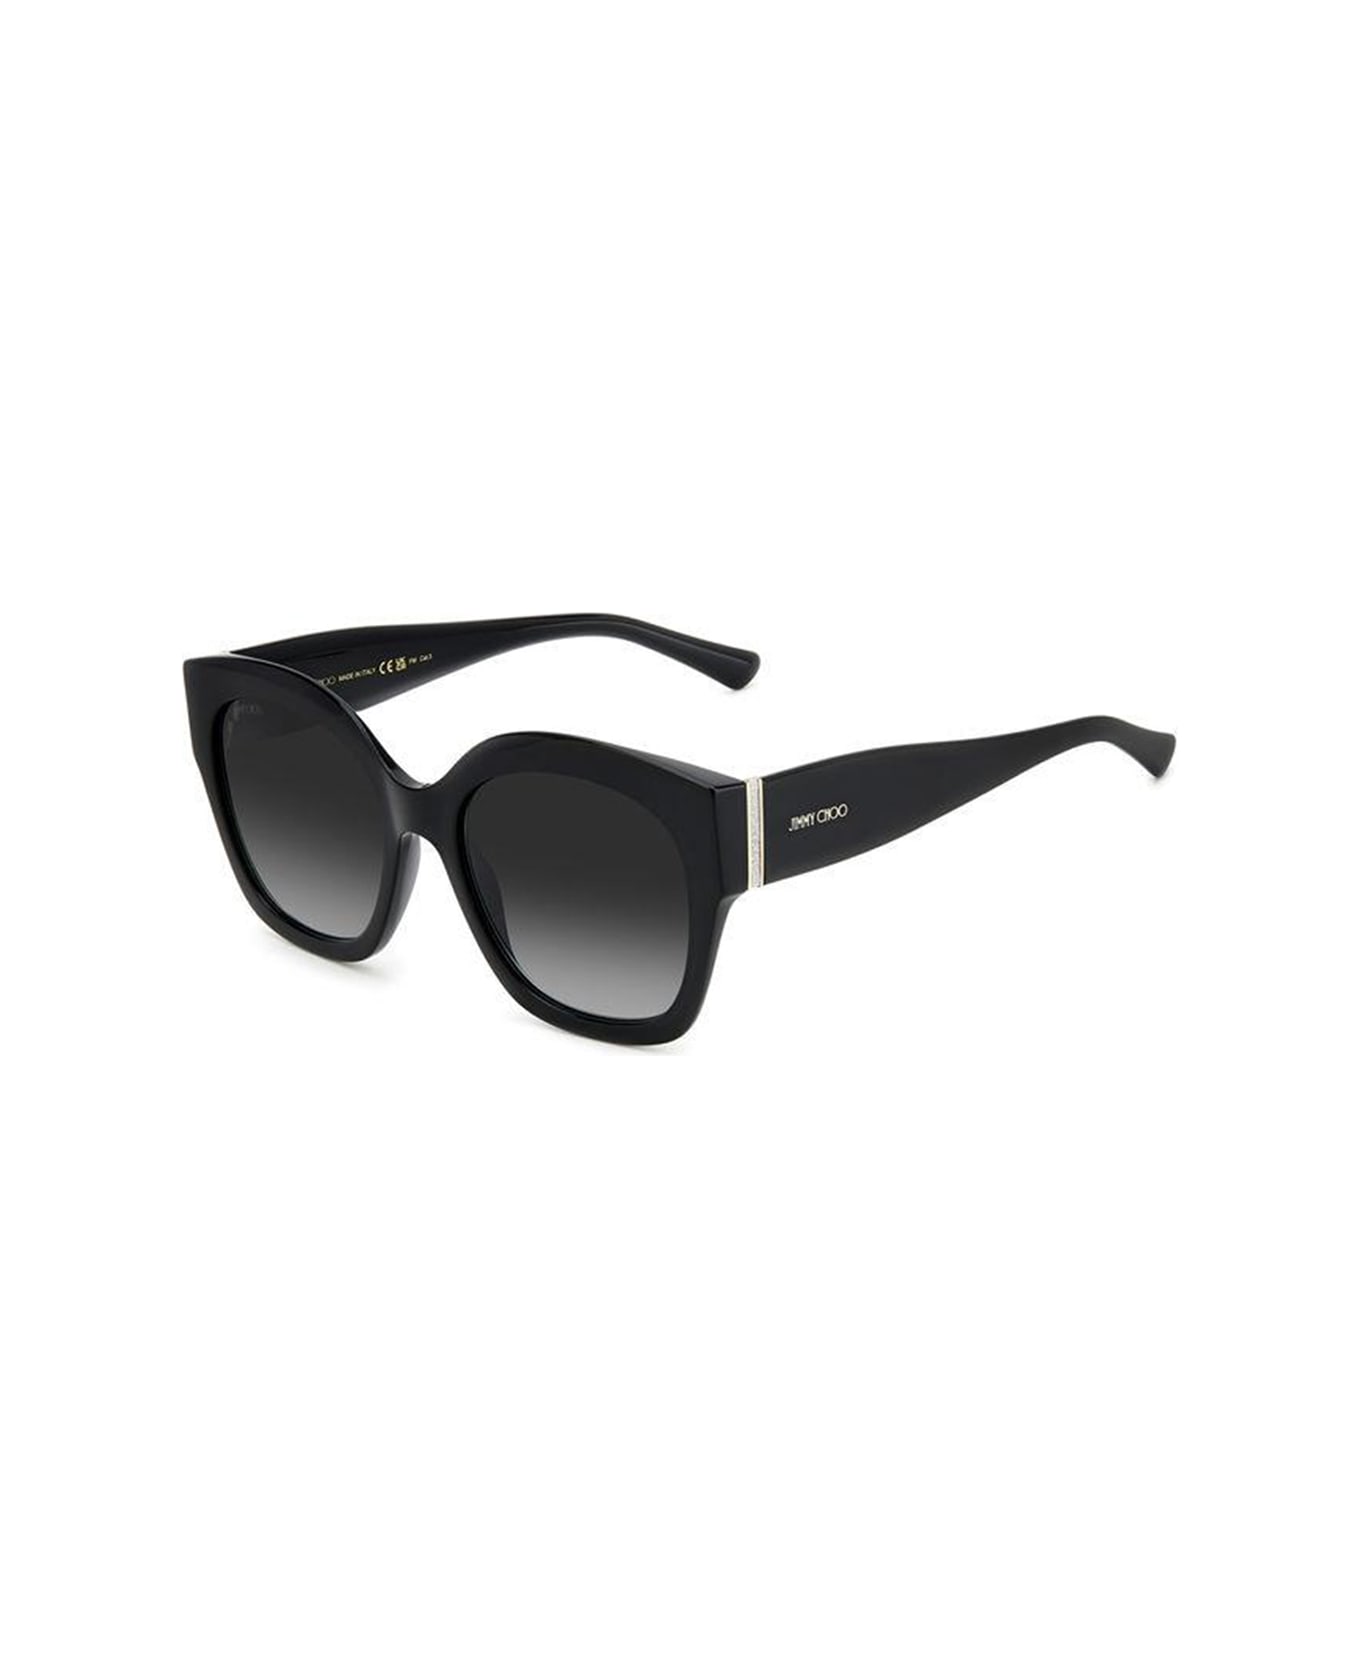 Jimmy Choo Eyewear Jc Leela/s 807/9o Black Sunglasses - Nero